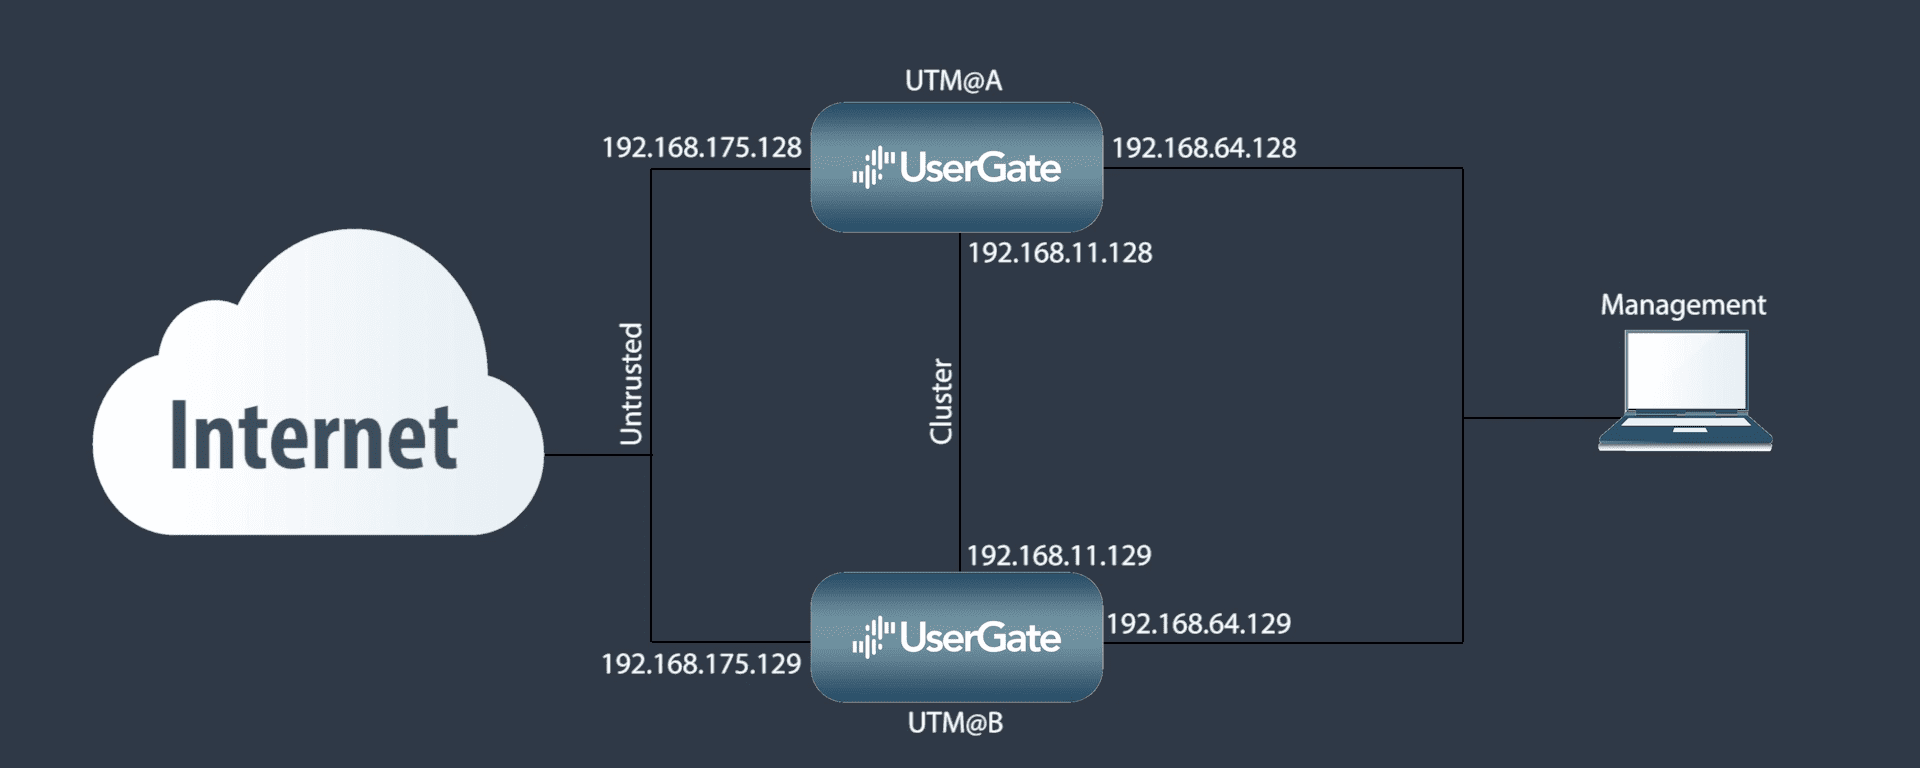 Схема настройки кластера конфигурации UserGate